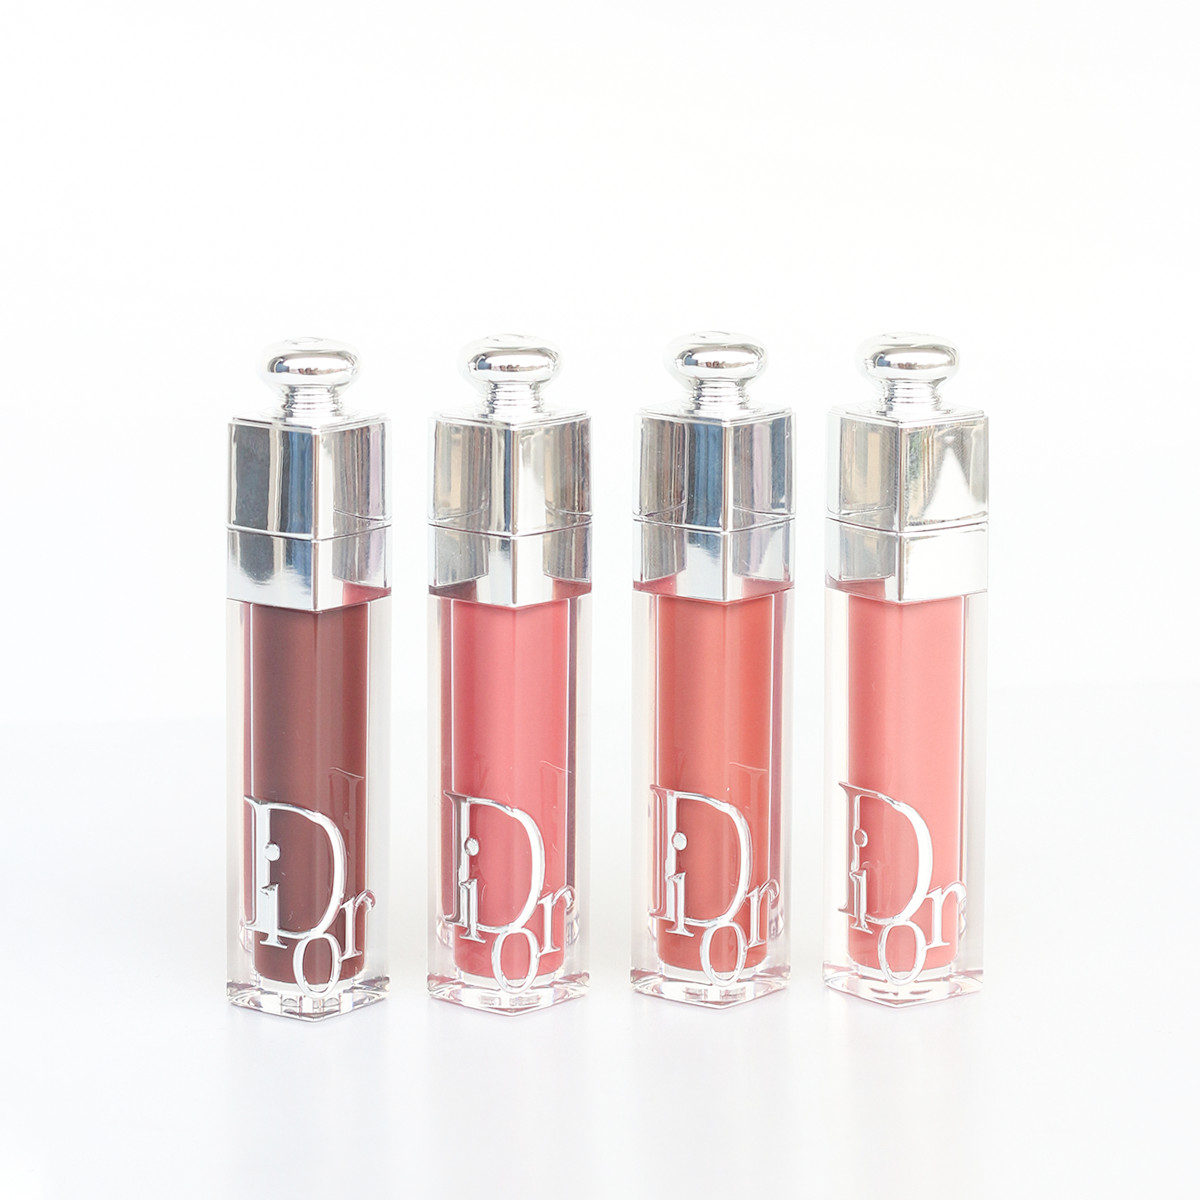 Son dưỡng môi Dior Lip Maximizer chuẩn authentic cao cấp